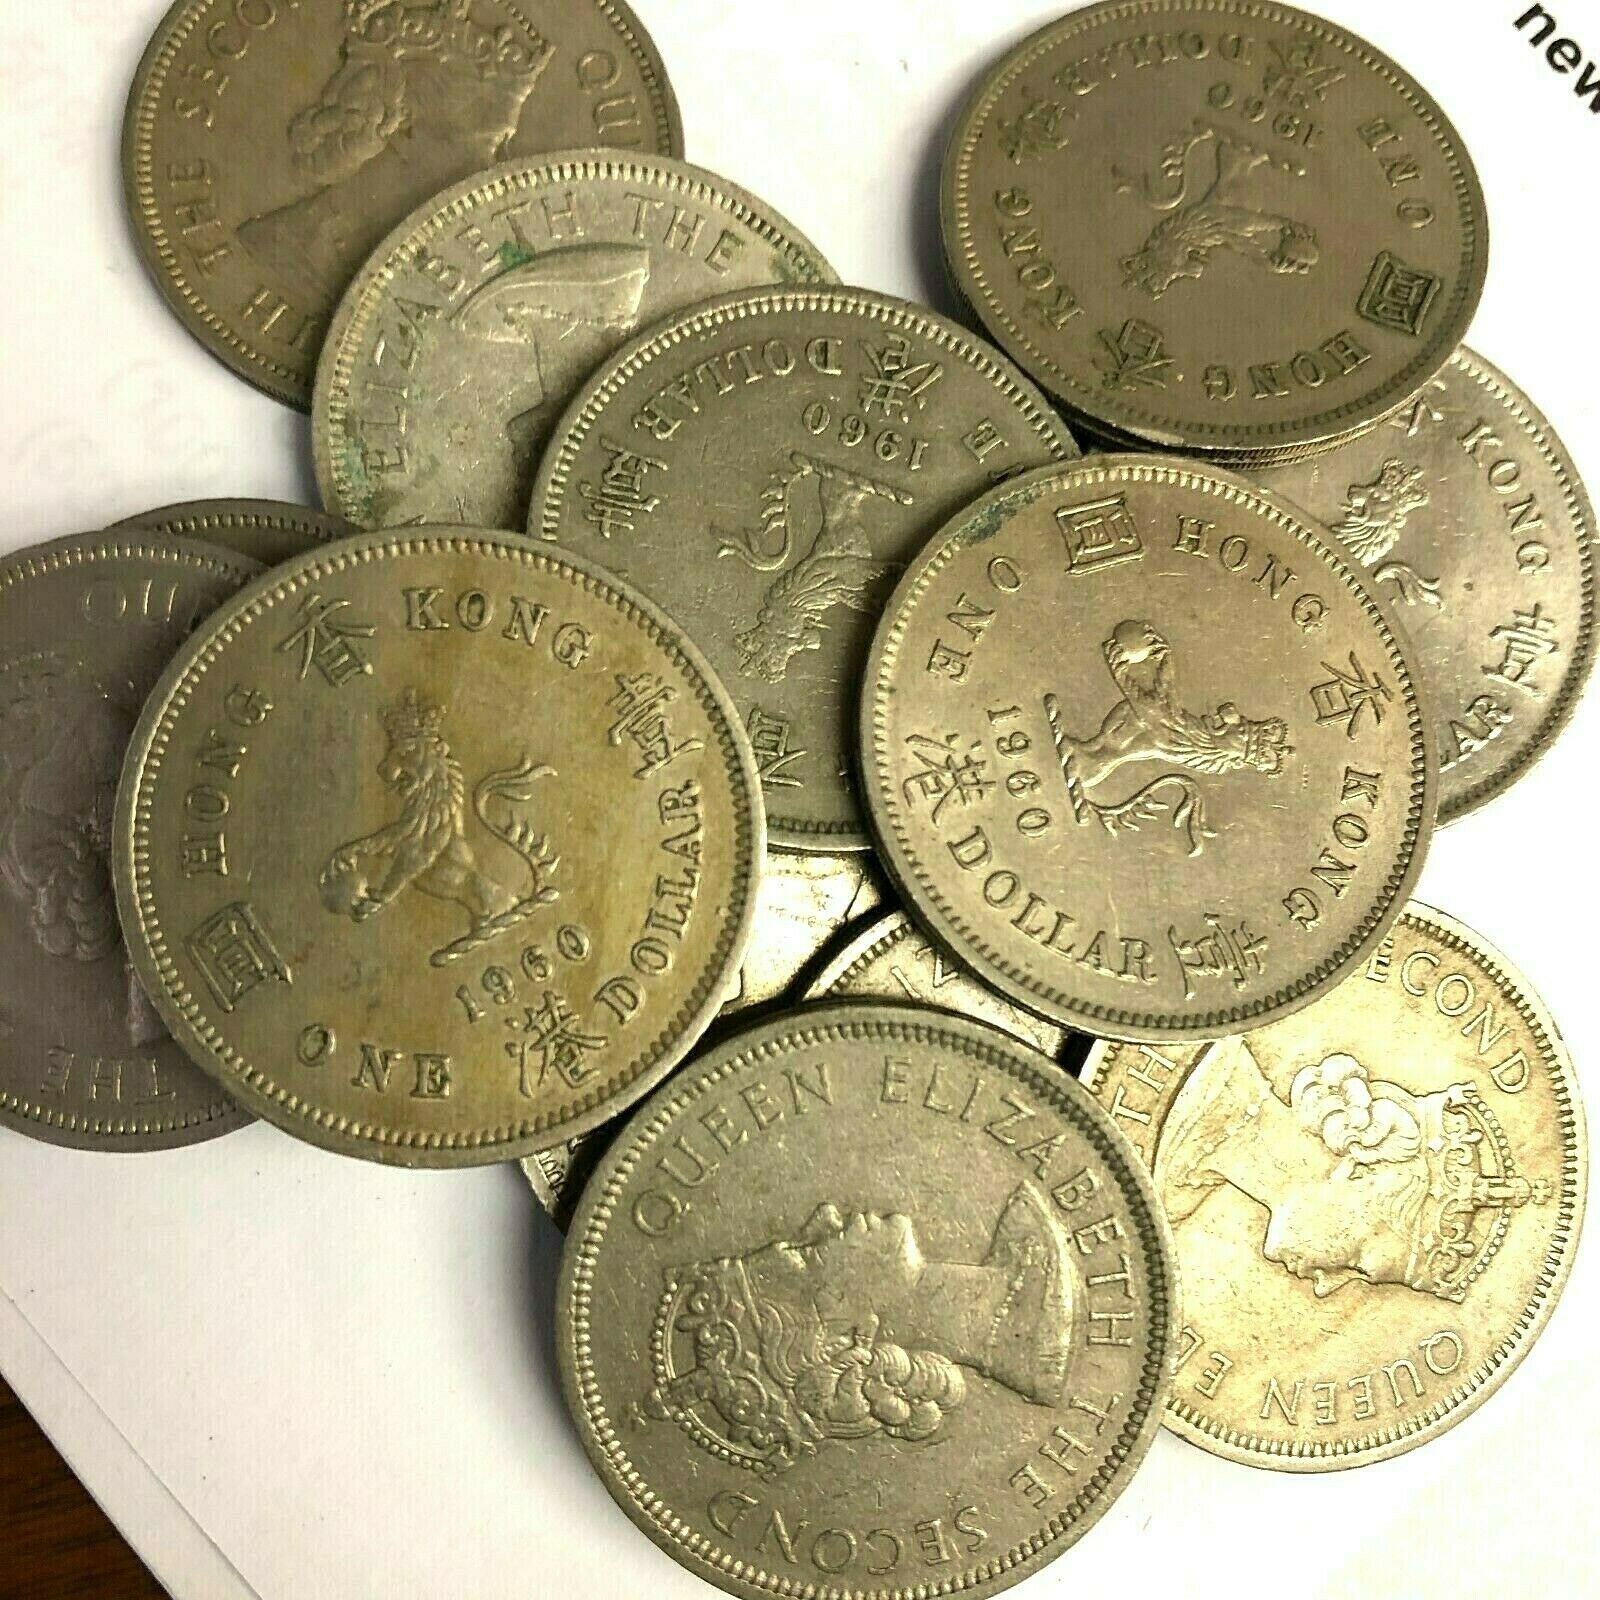 HONG KONG $1 One Dollar vintage coin (1960-1975 dates), QEII & Lion 